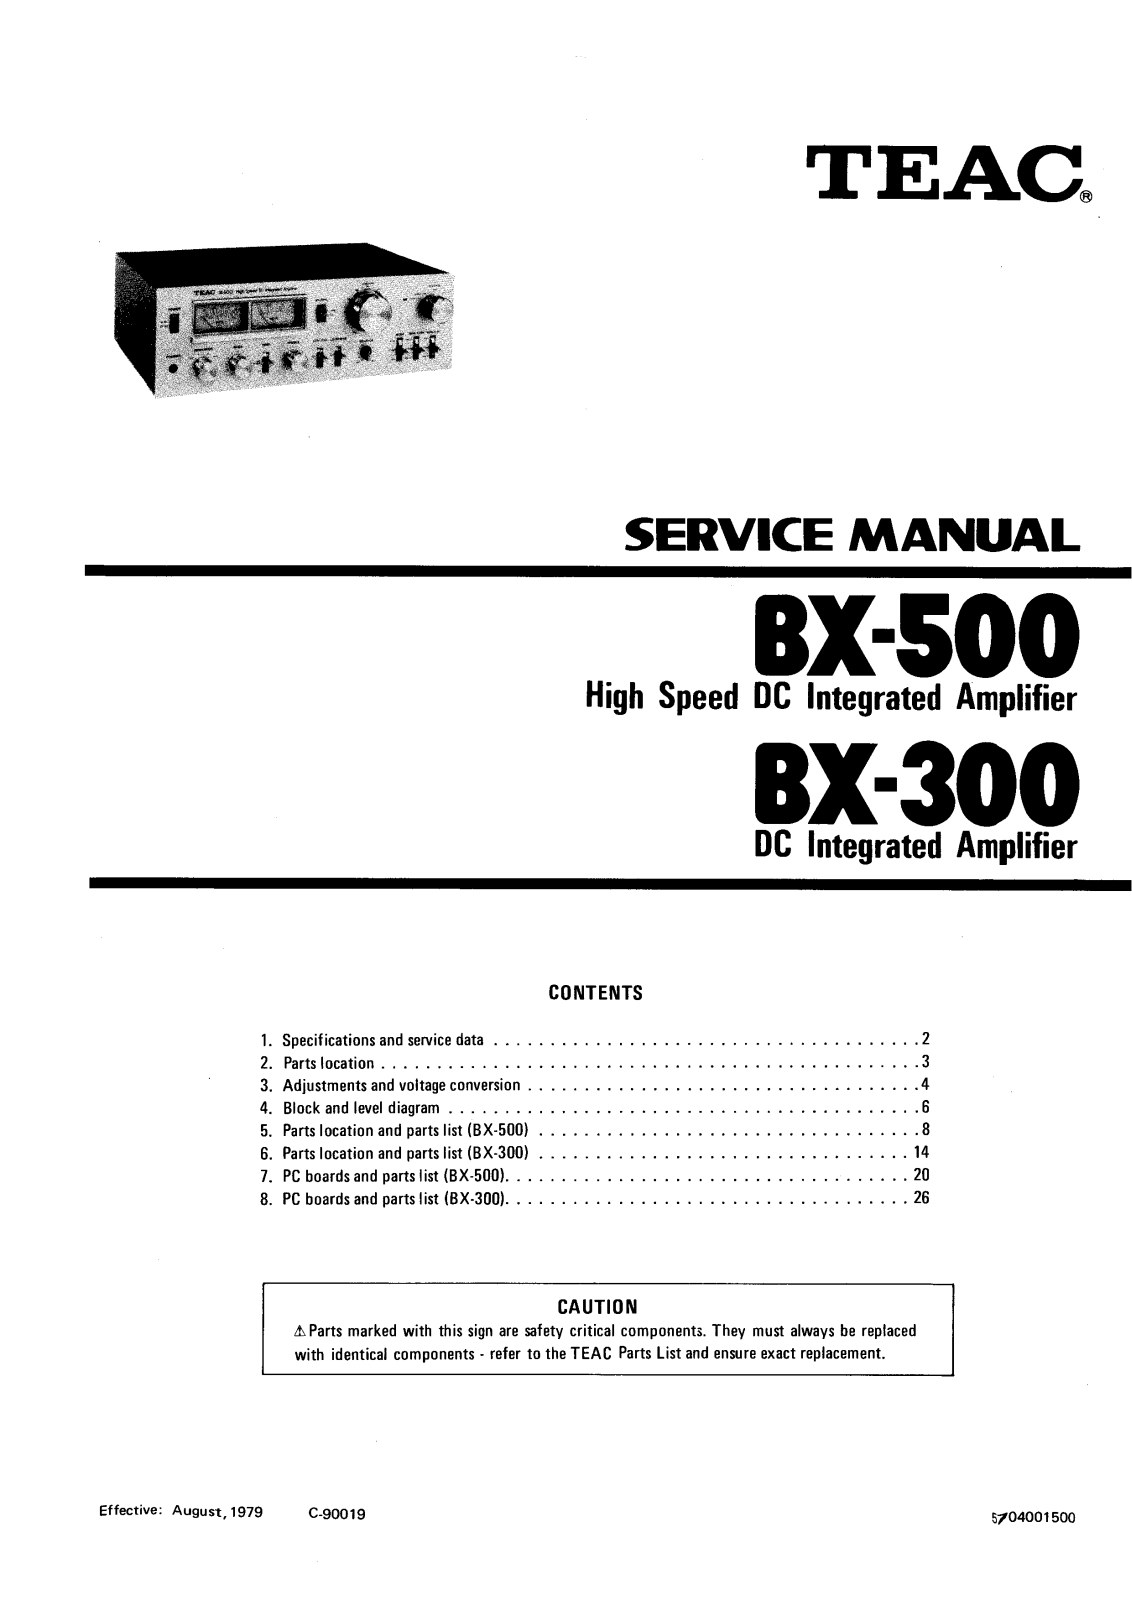 TEAC BX-300, BX-500 Service manual